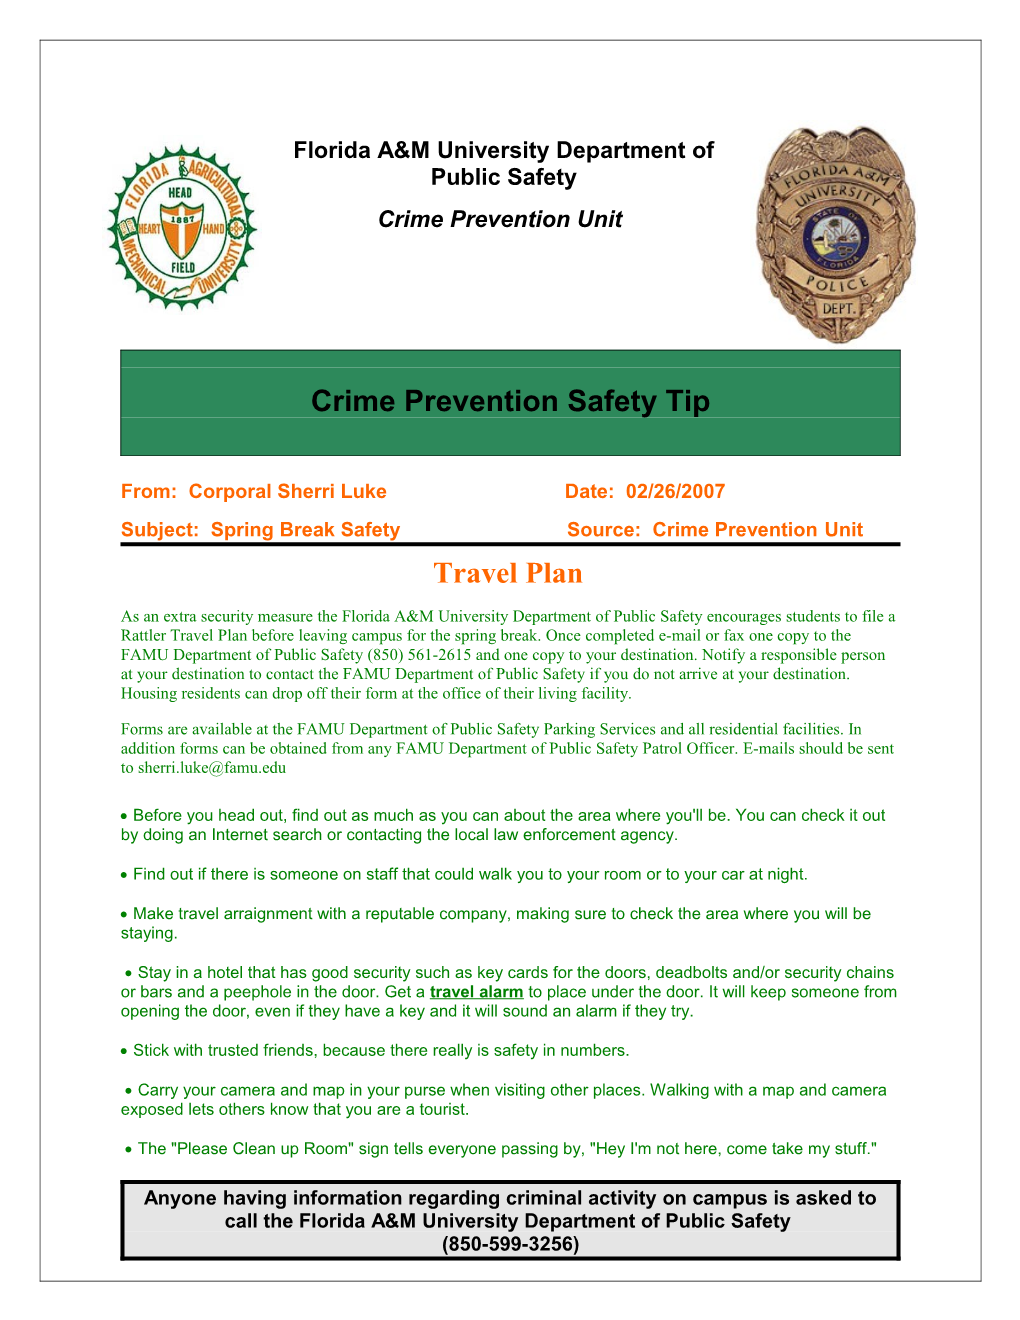 Crime Prevention Safety Tip